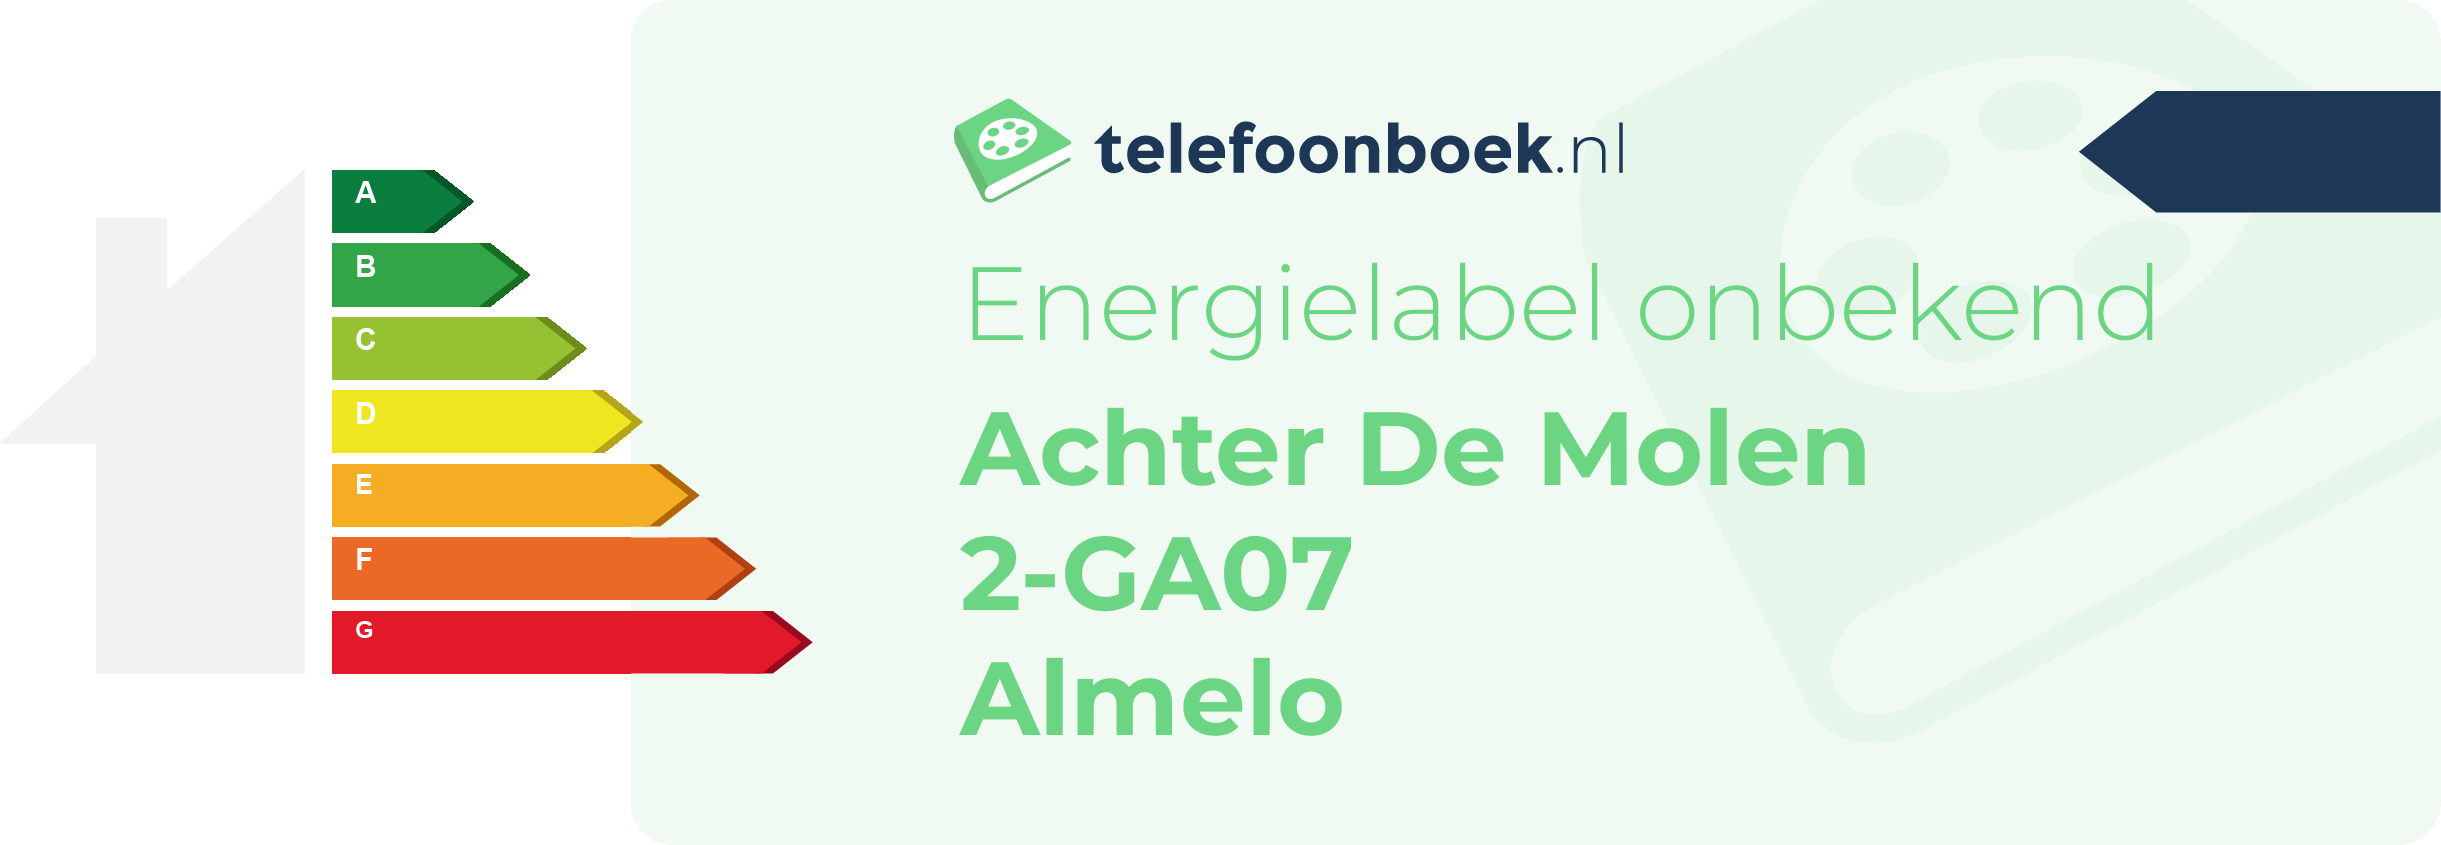 Energielabel Achter De Molen 2-GA07 Almelo